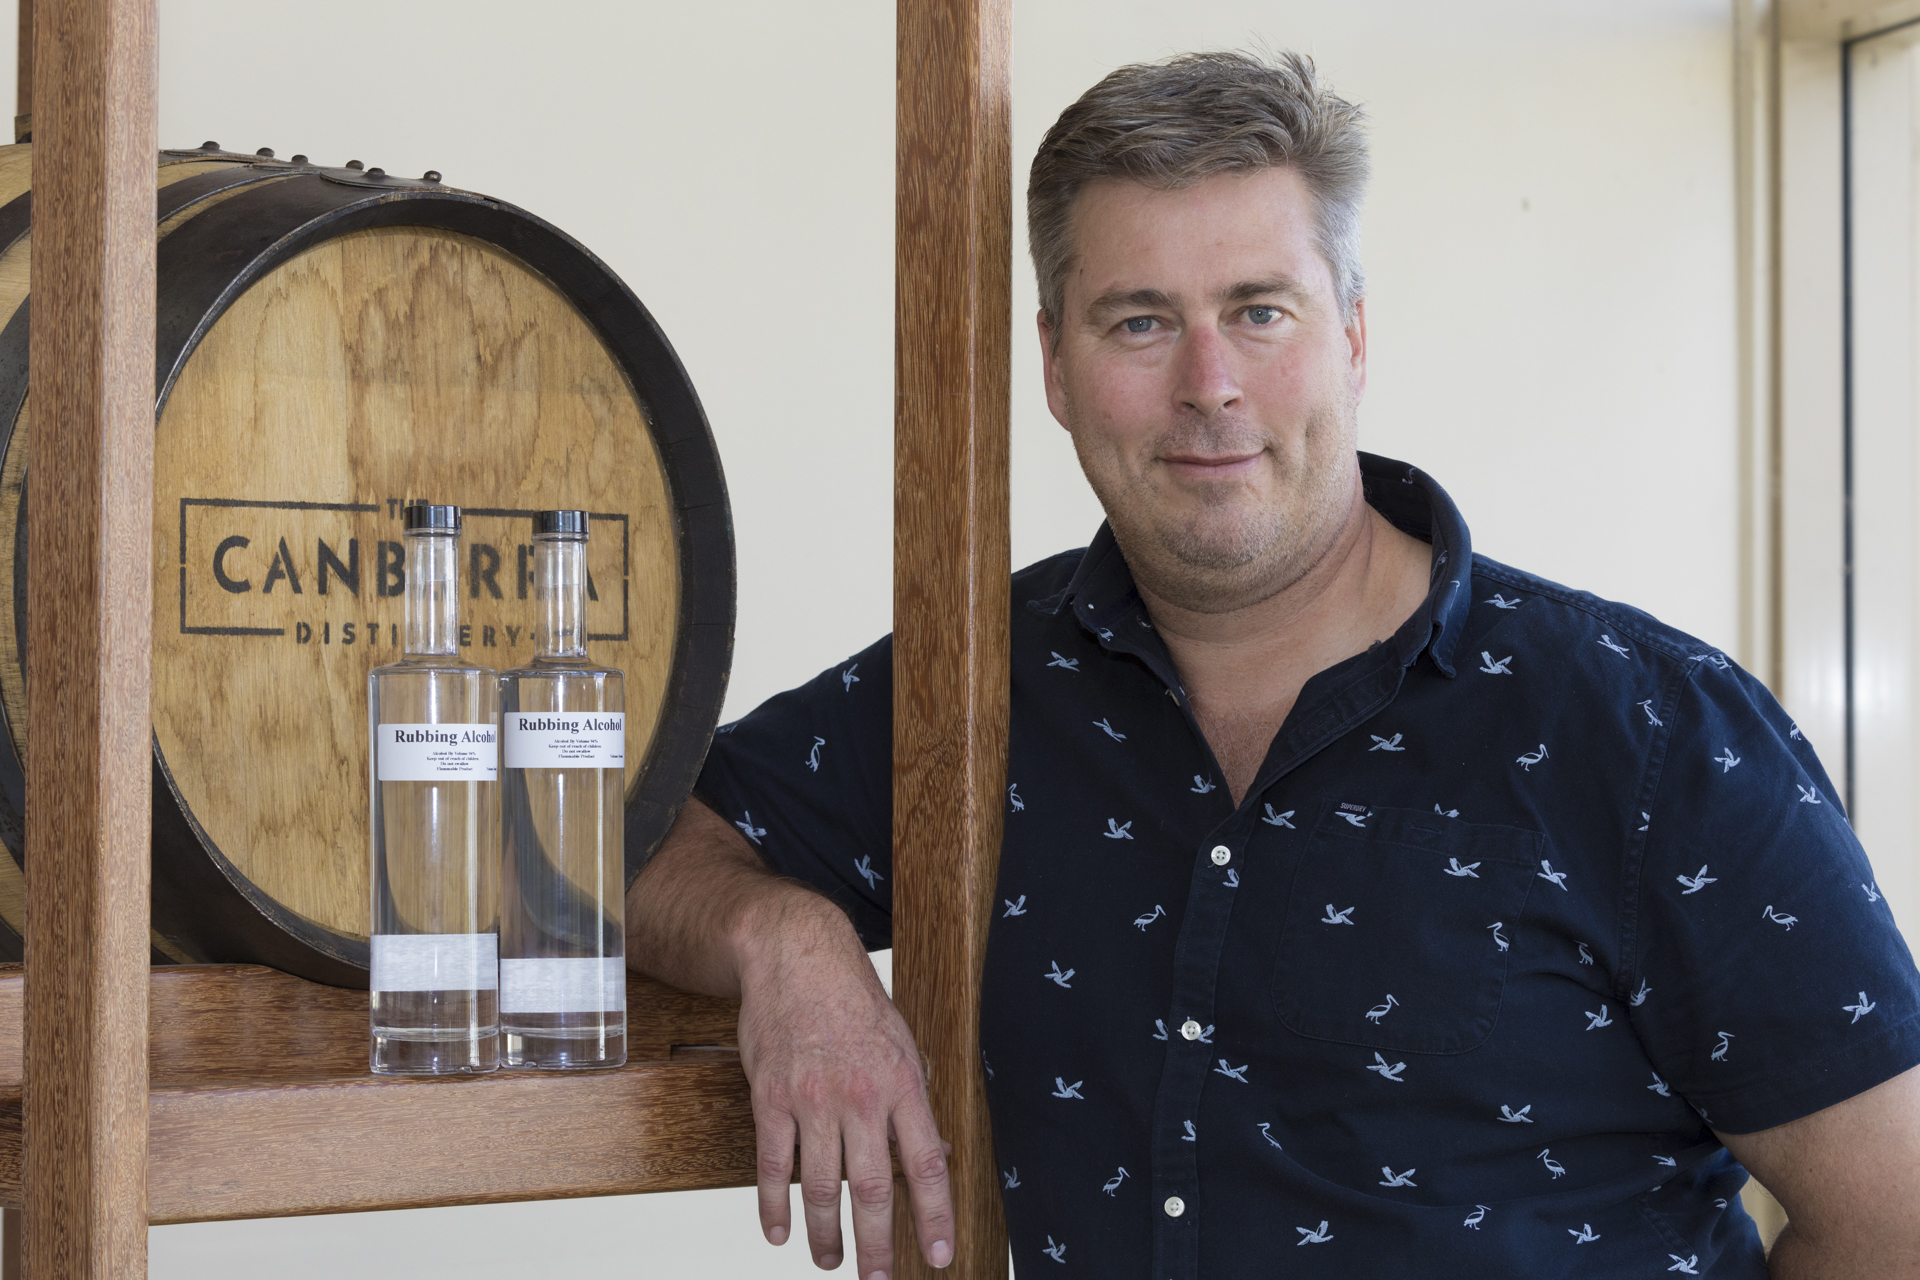 Canberra distilleries get into the spirit of sanitiser